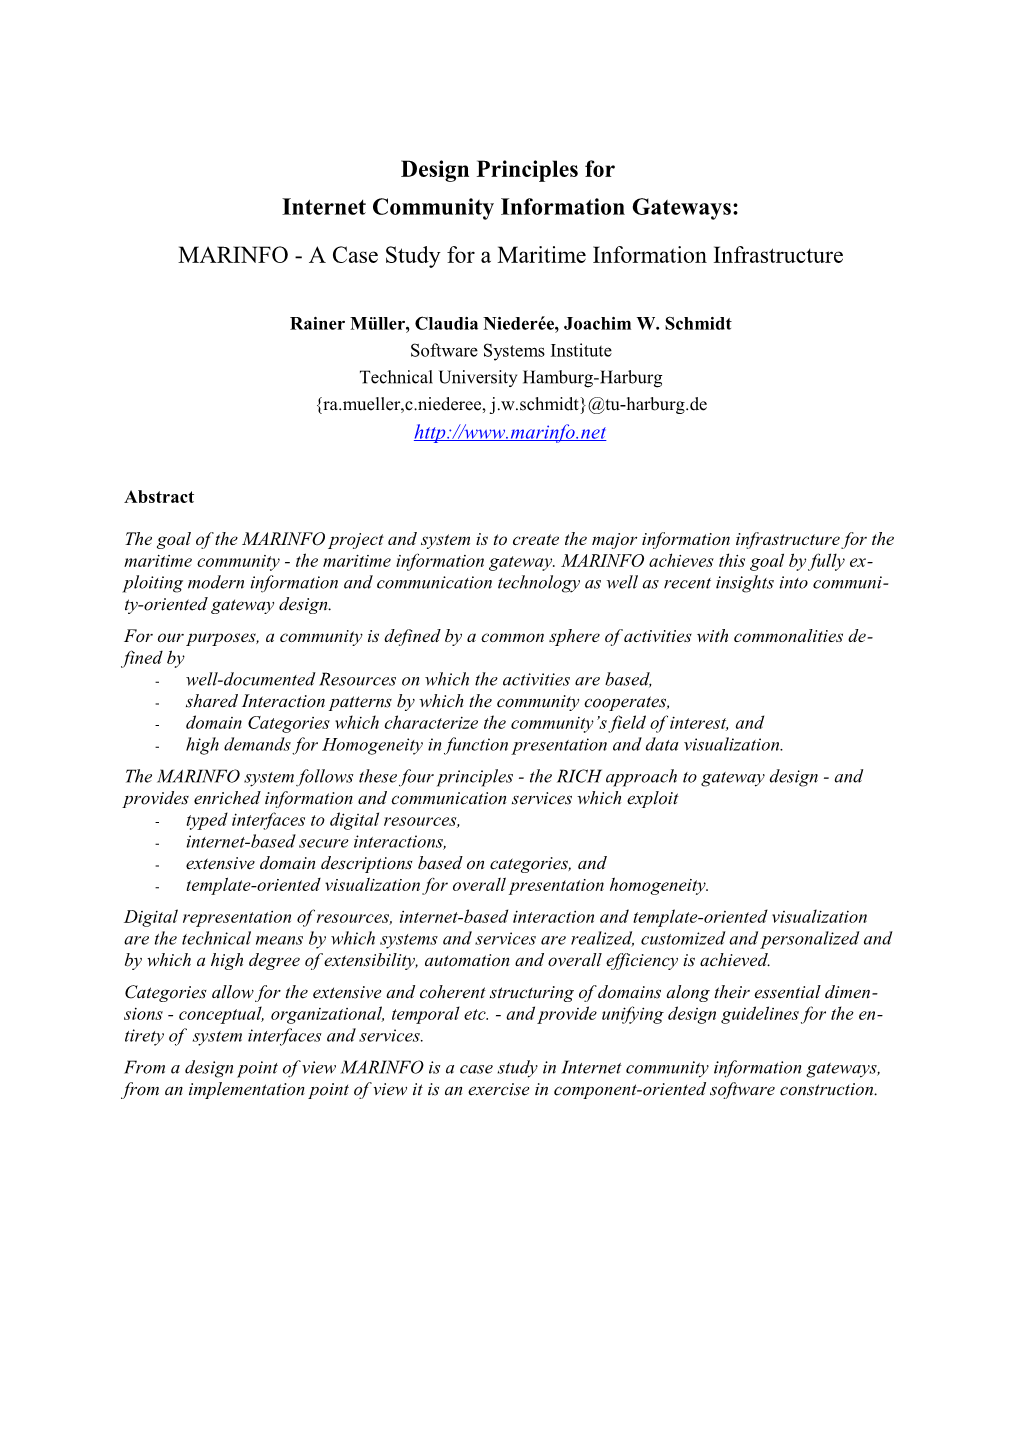 Design Principles for Internet Community Information Gateways: MARINFO - a Case Study For